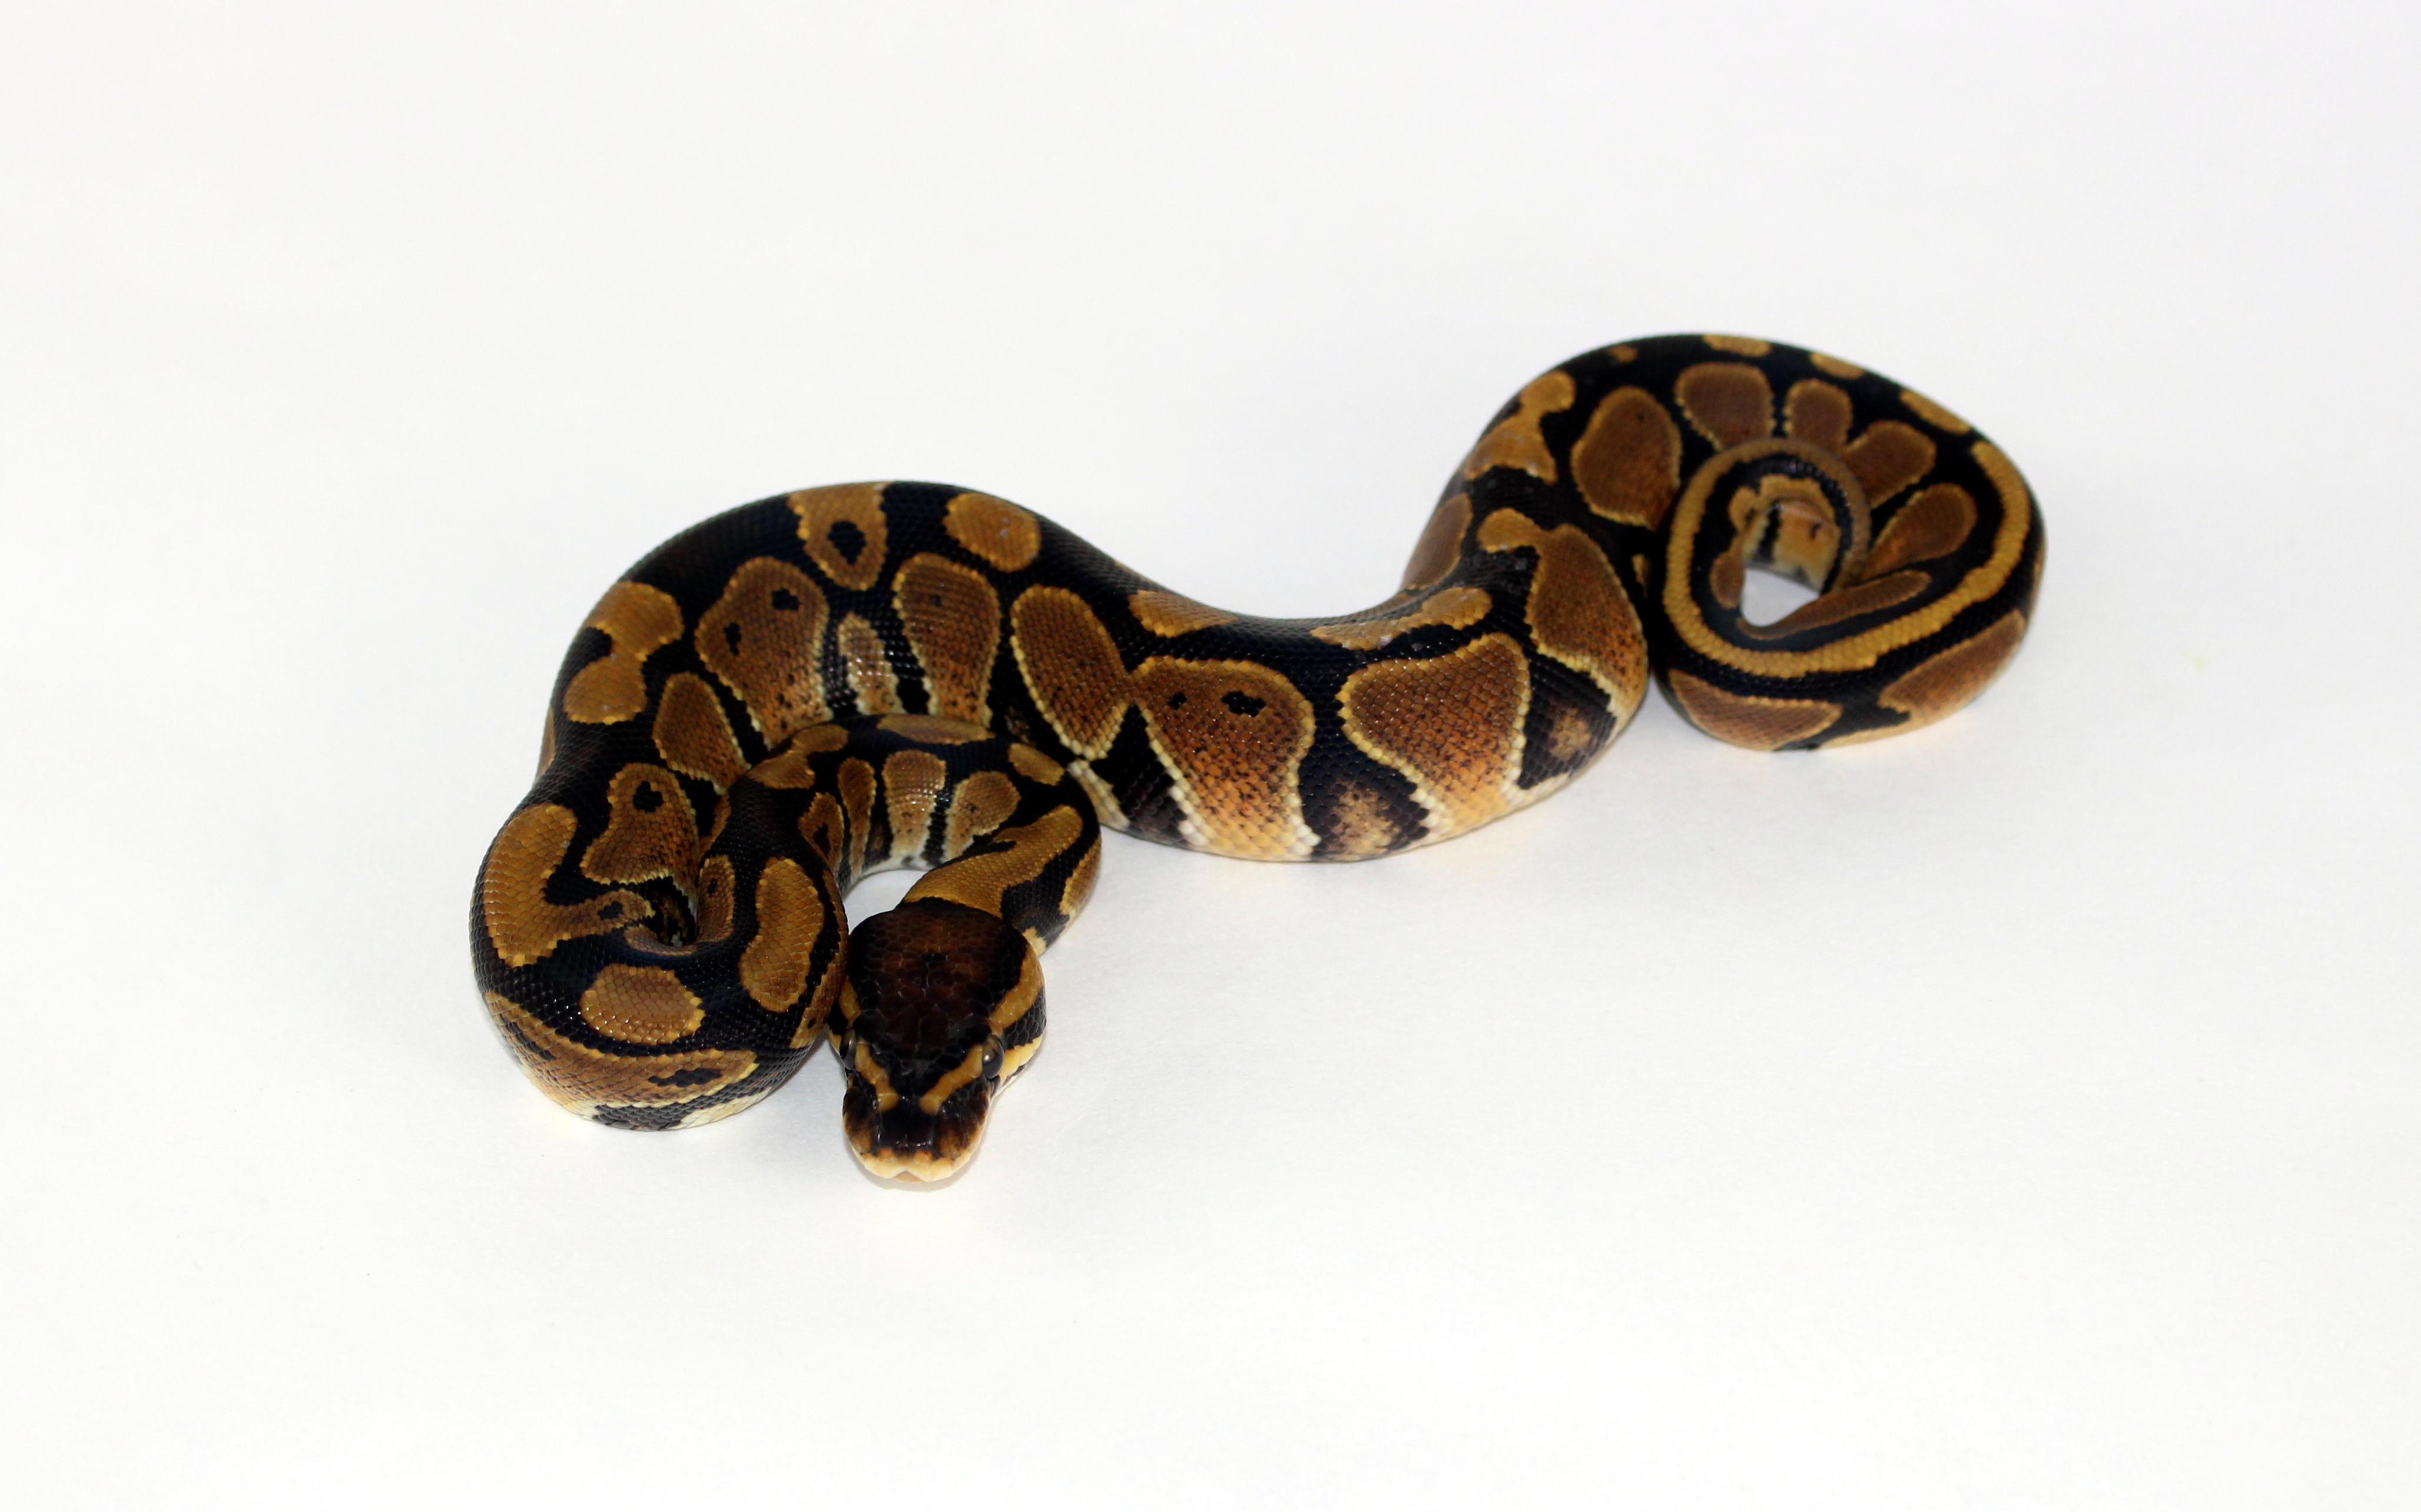 NR Mandarin Ball Python by Vivid Pythons